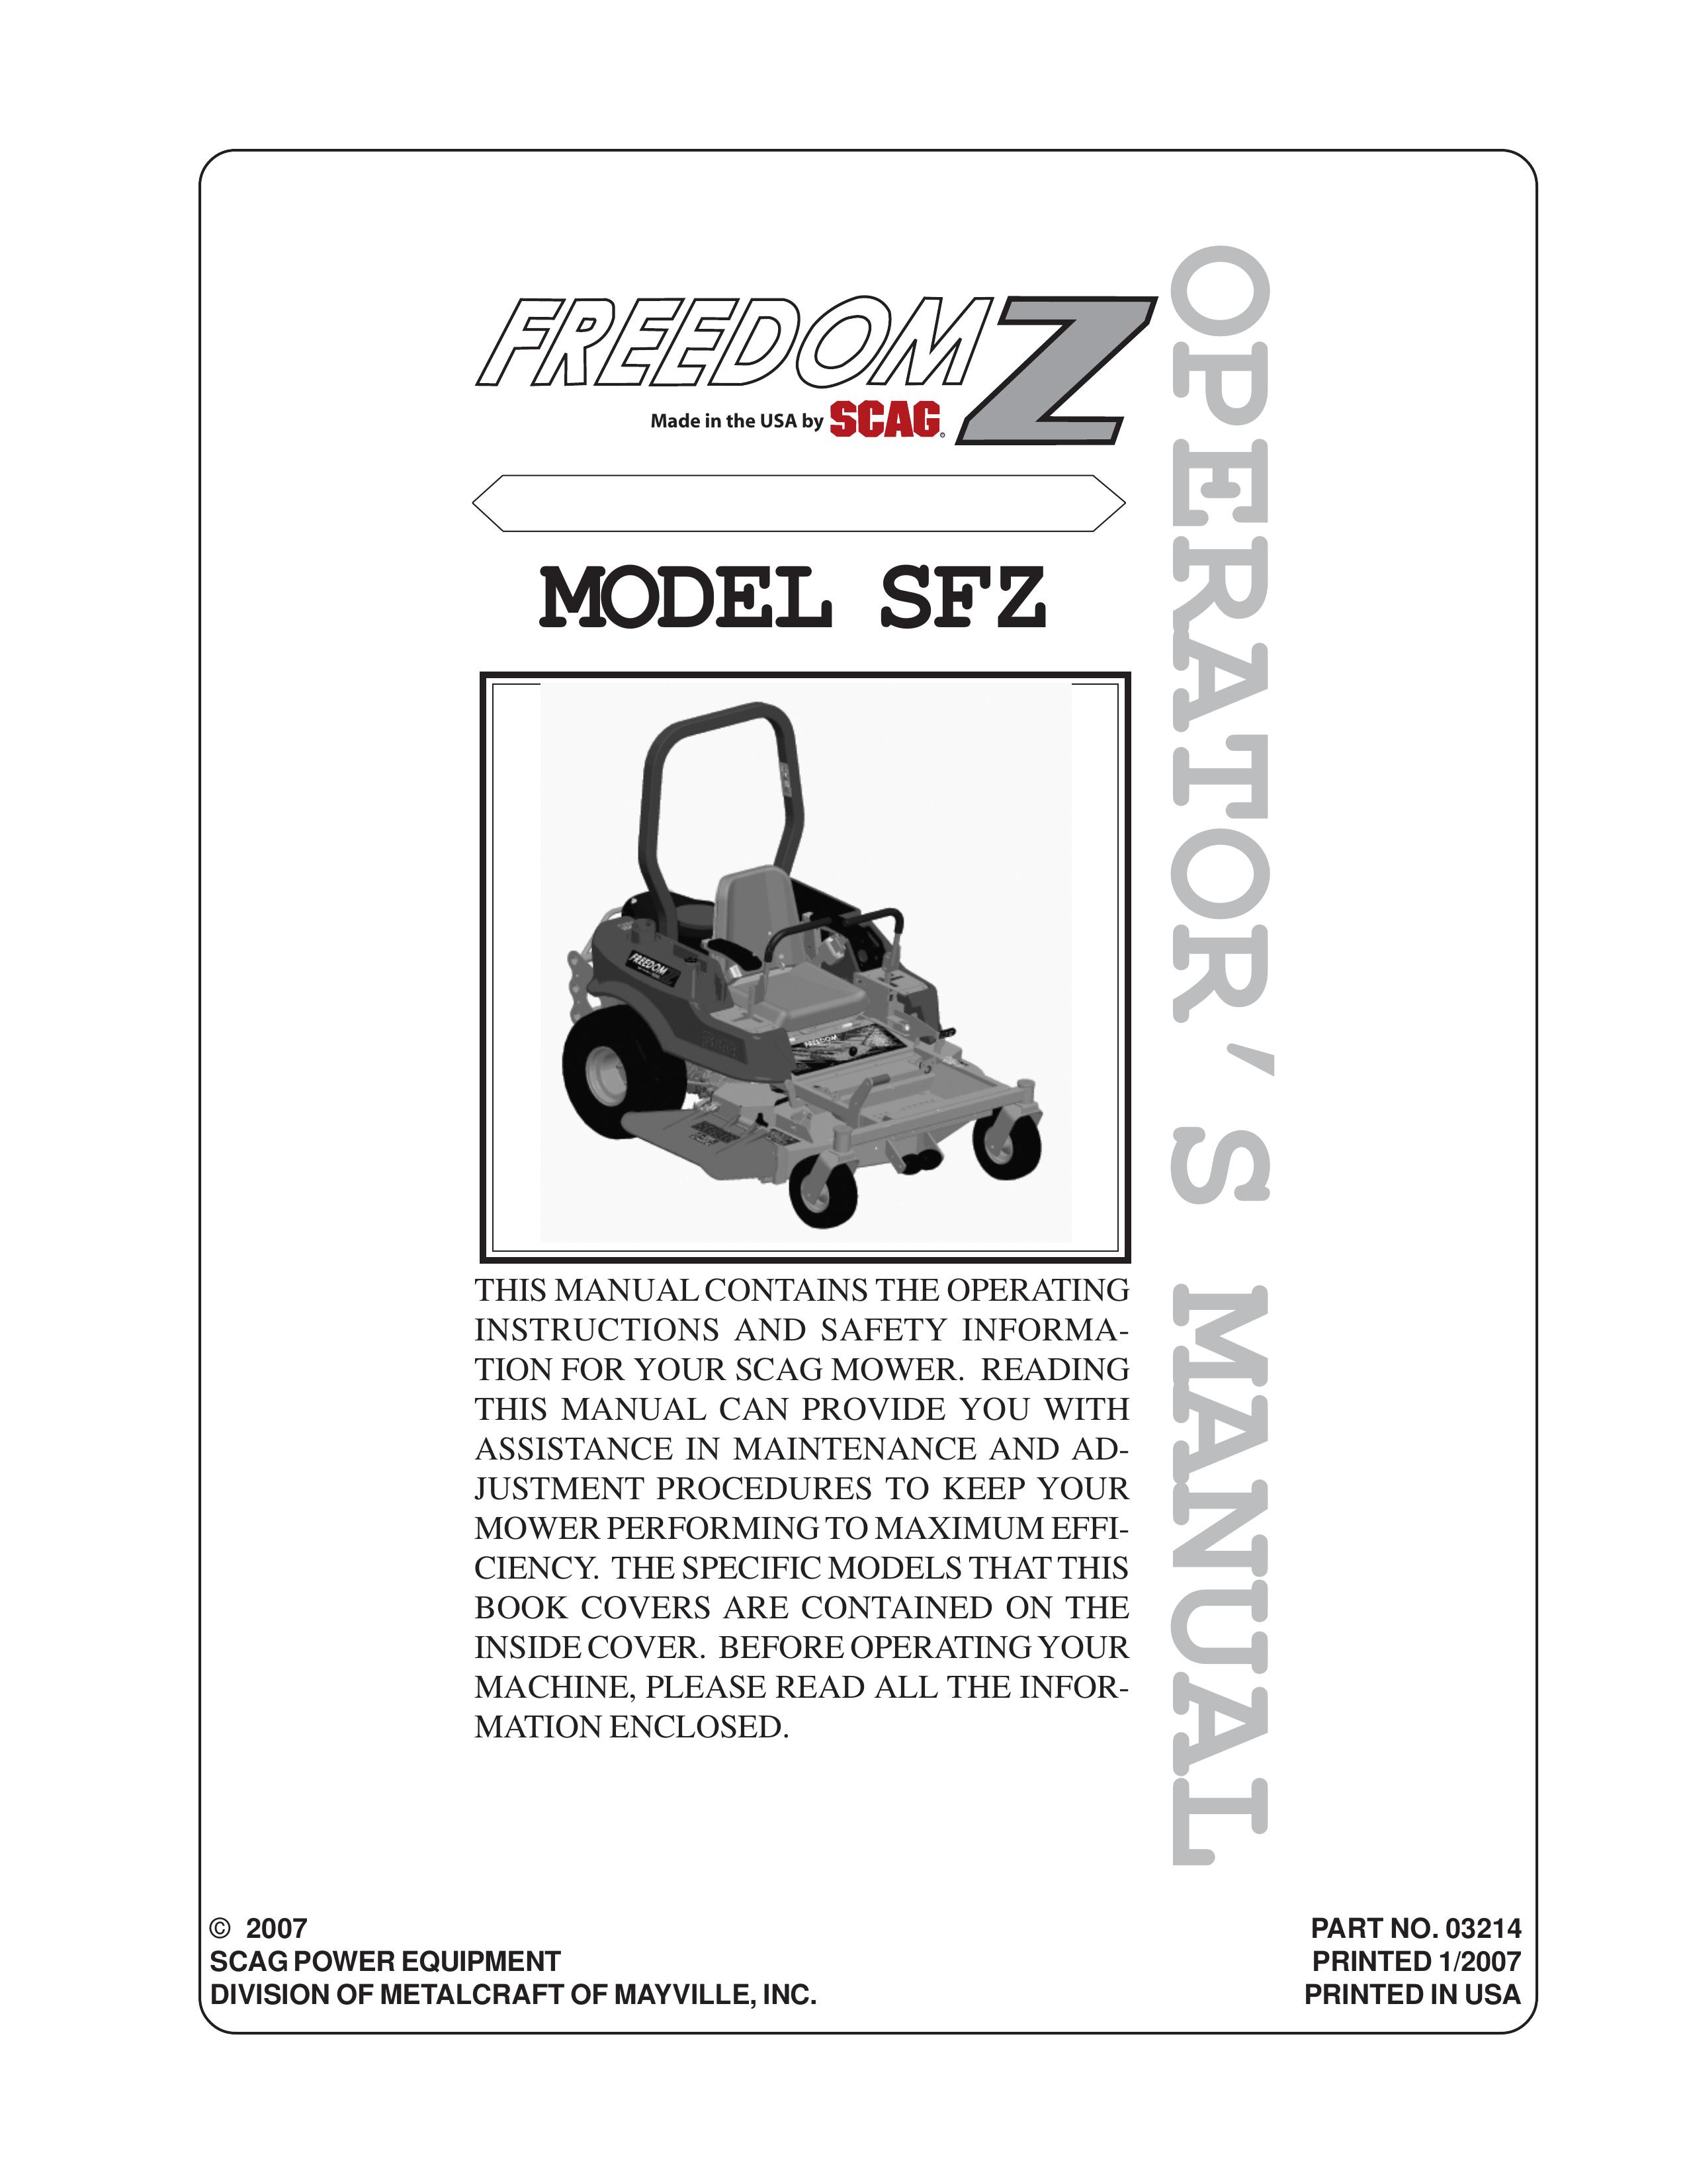 Scag Power Equipment SFZ Lawn Mower User Manual